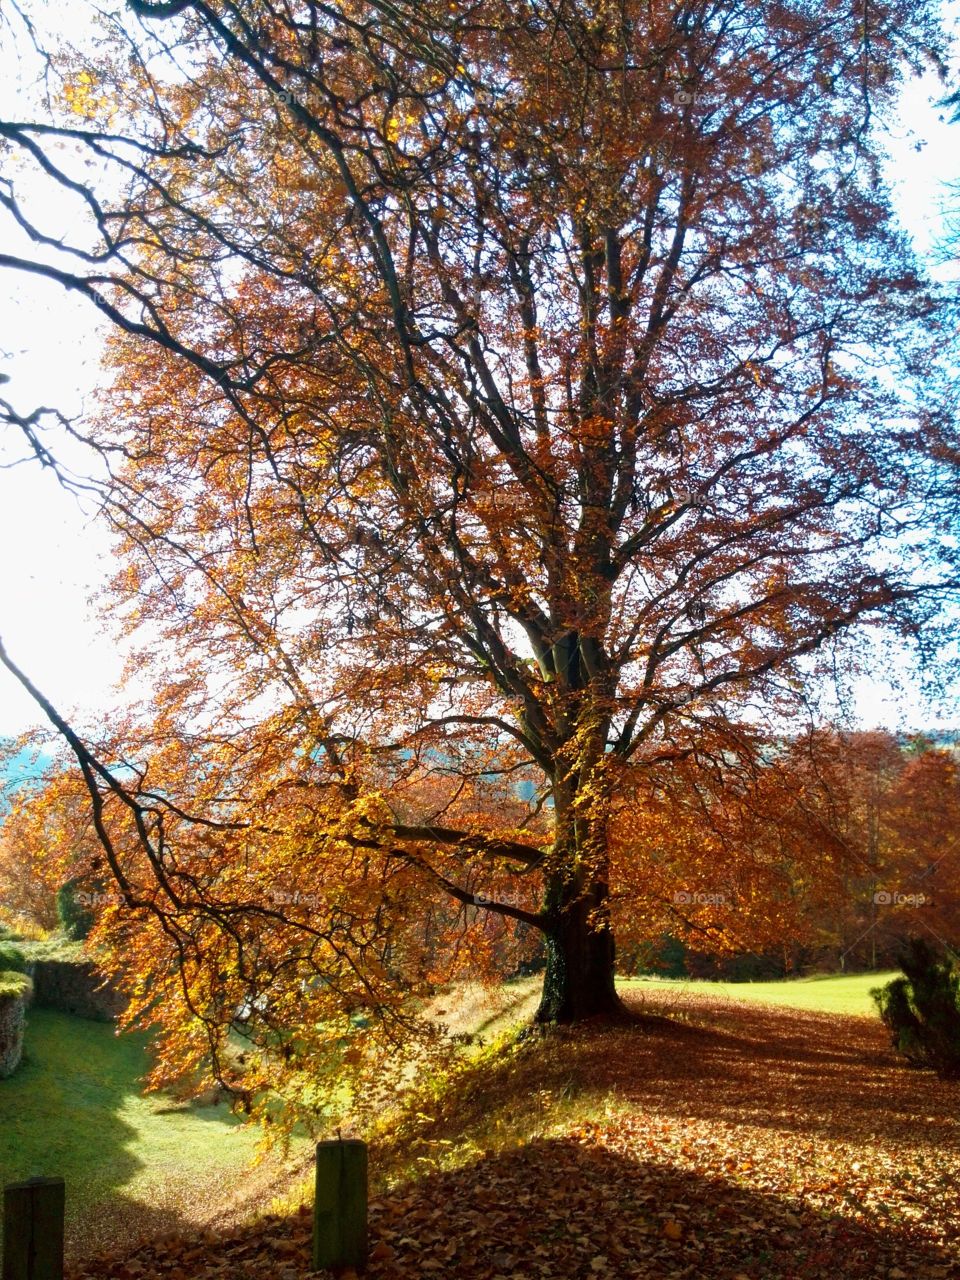  Impressively large tree in Autumn